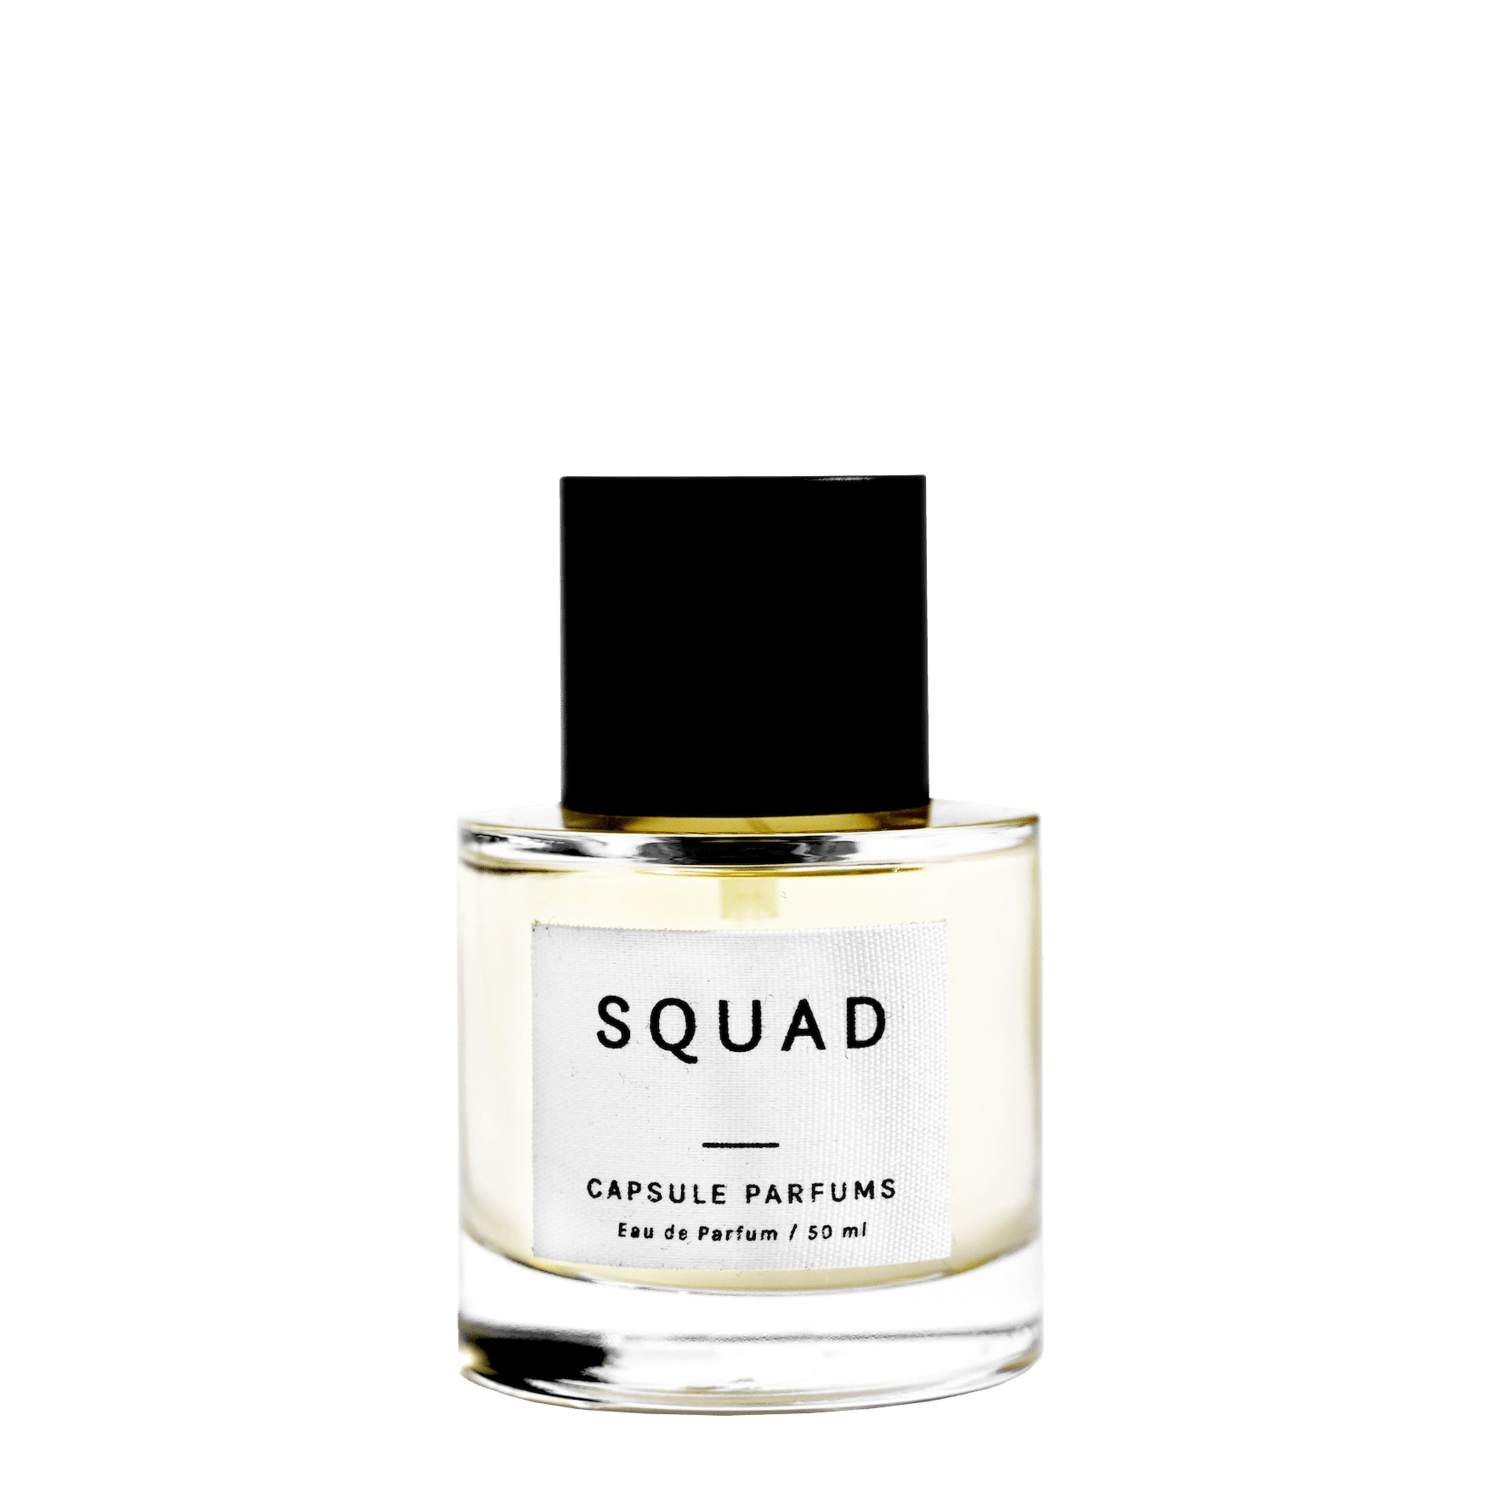 Capsule Parfumerie Perfume & Cologne Squad sunja link - canada